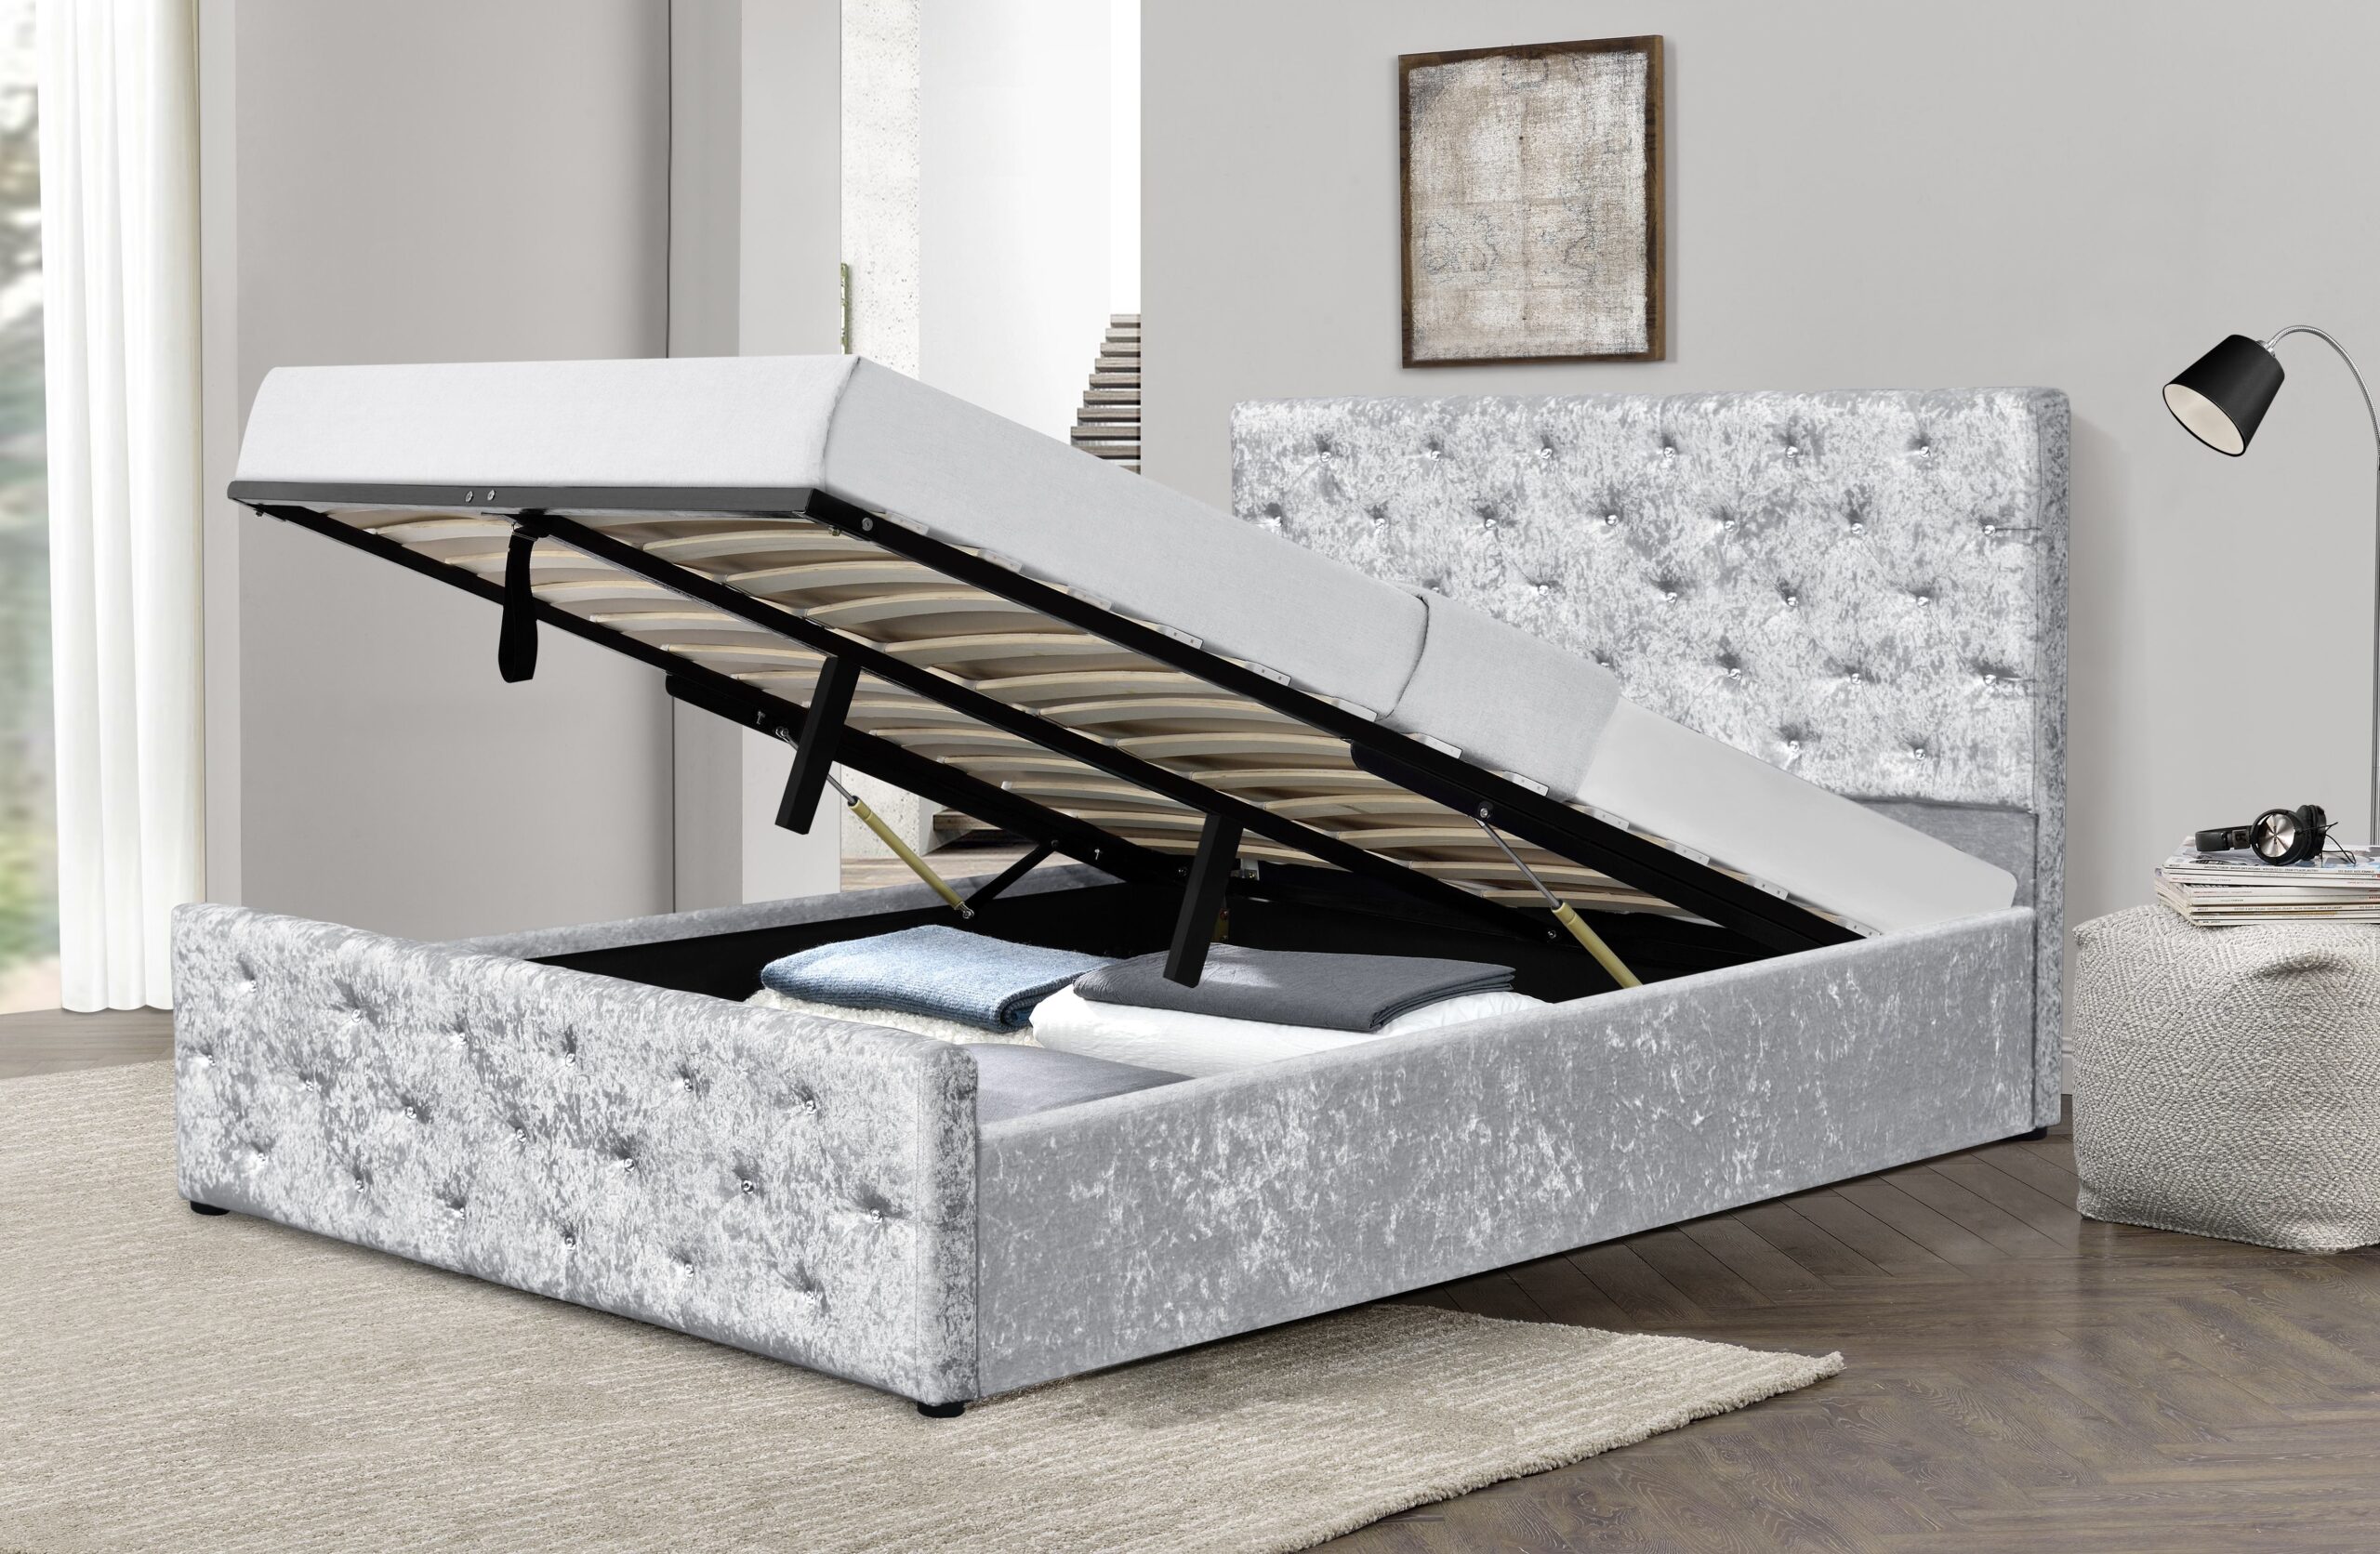 mattress for ottoman bed